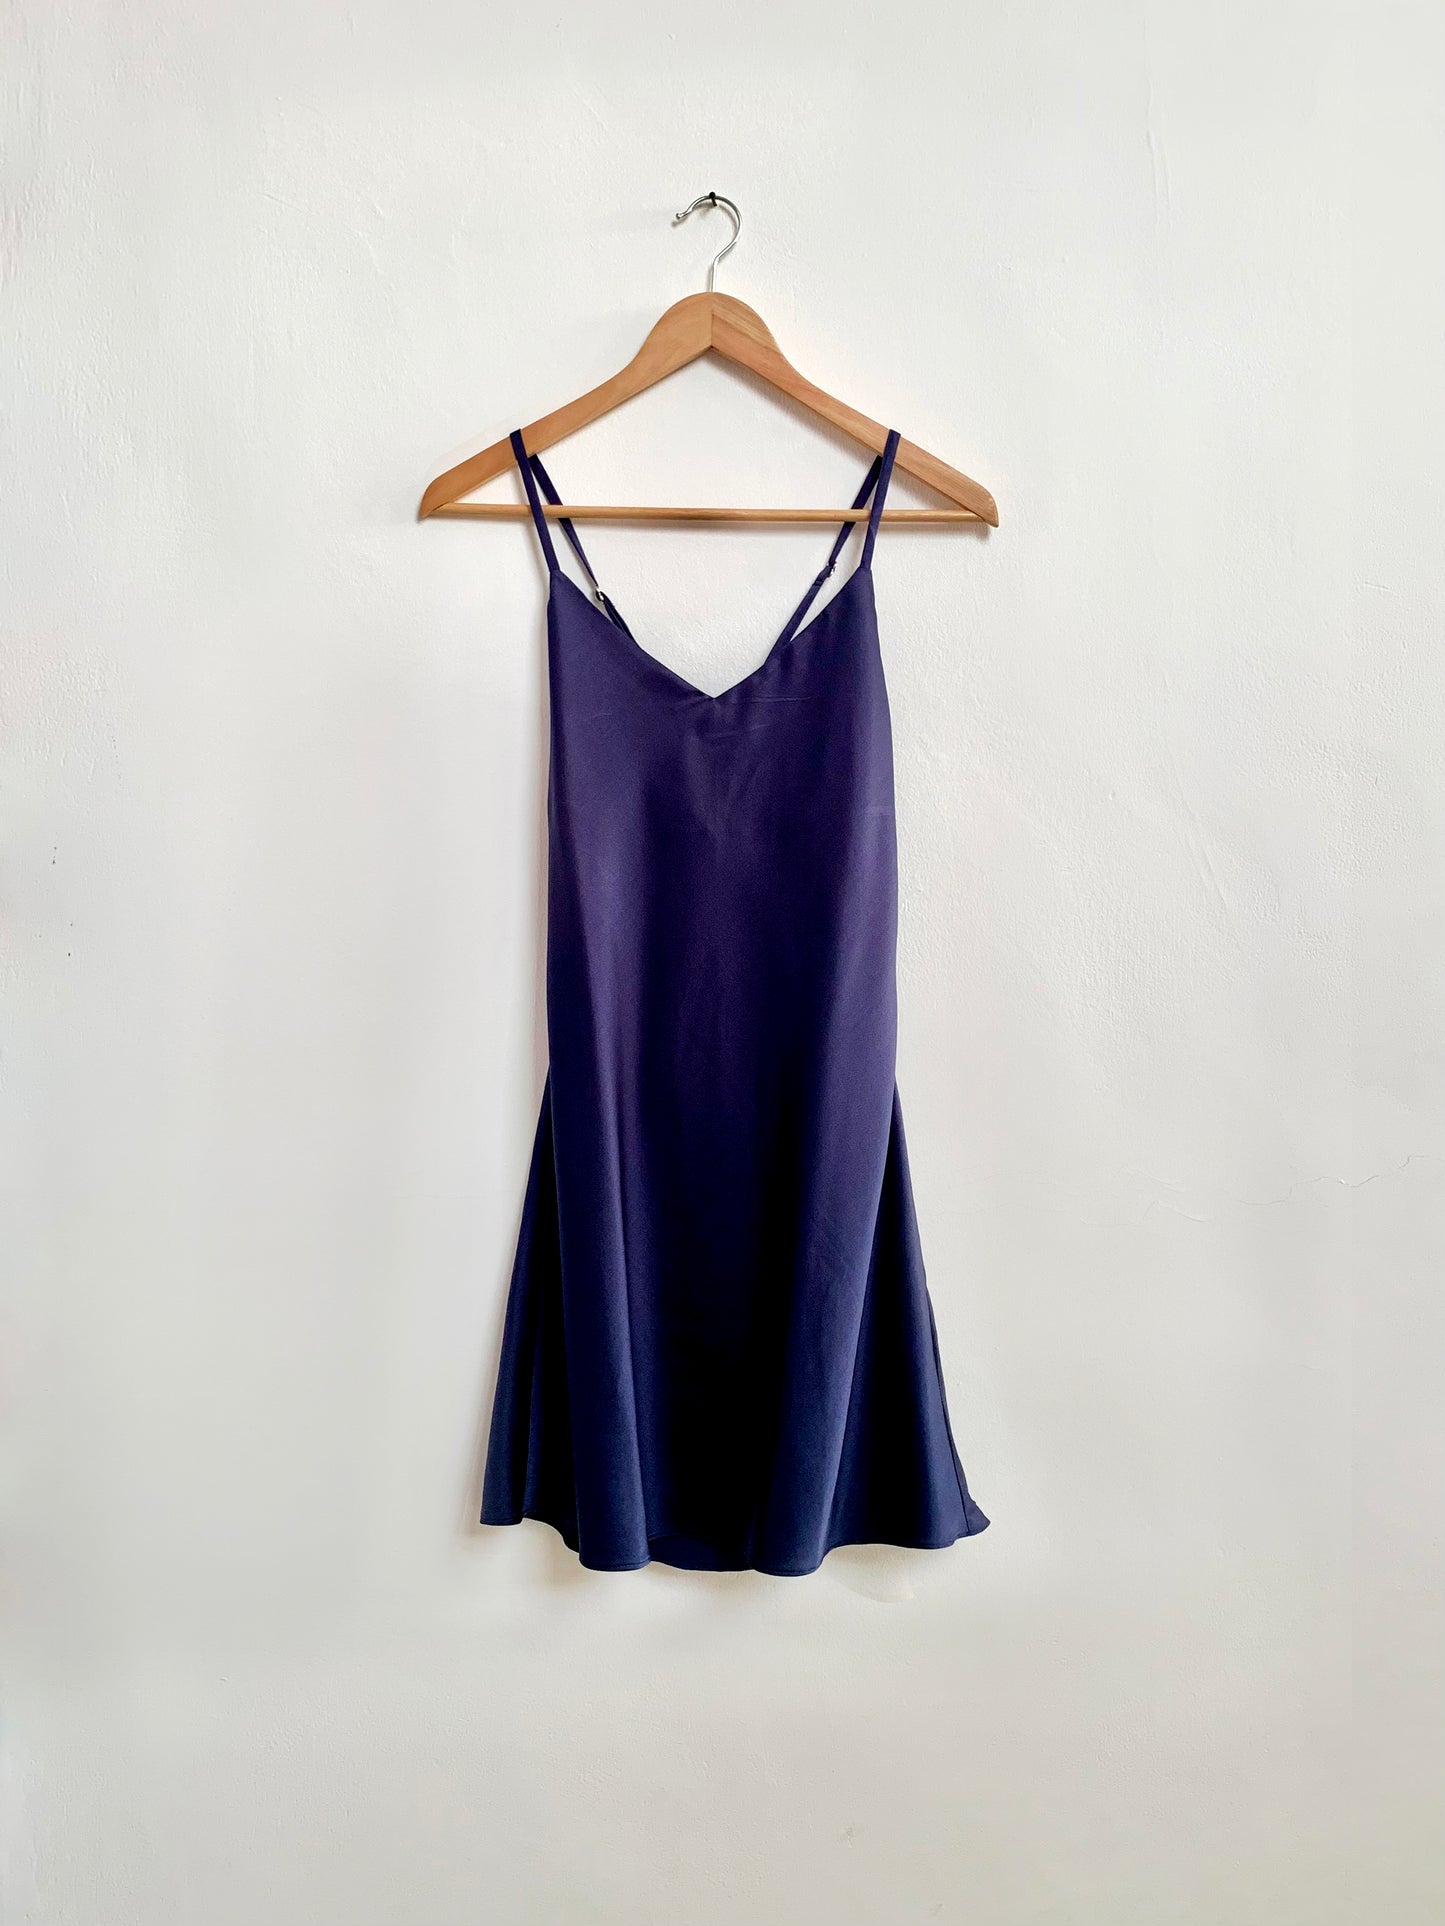 Silk slip dress